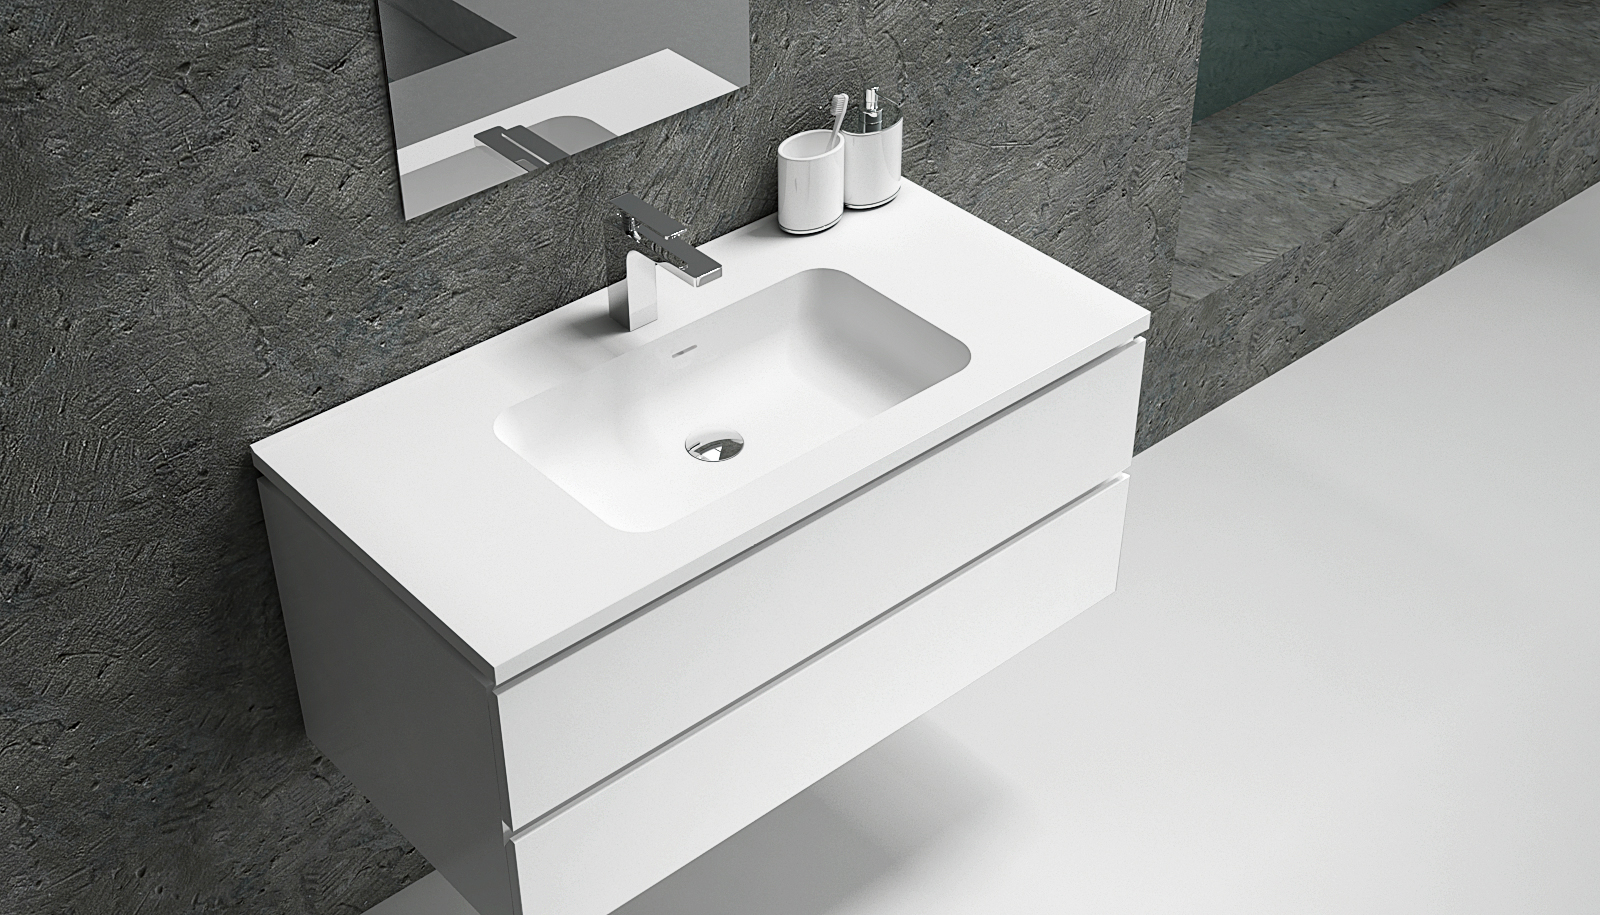 Italian Style Luxury Contemporary Stone Resin Vessel Sink Modern Art Sink matte White with Pop Up Drain Lilya 1320220